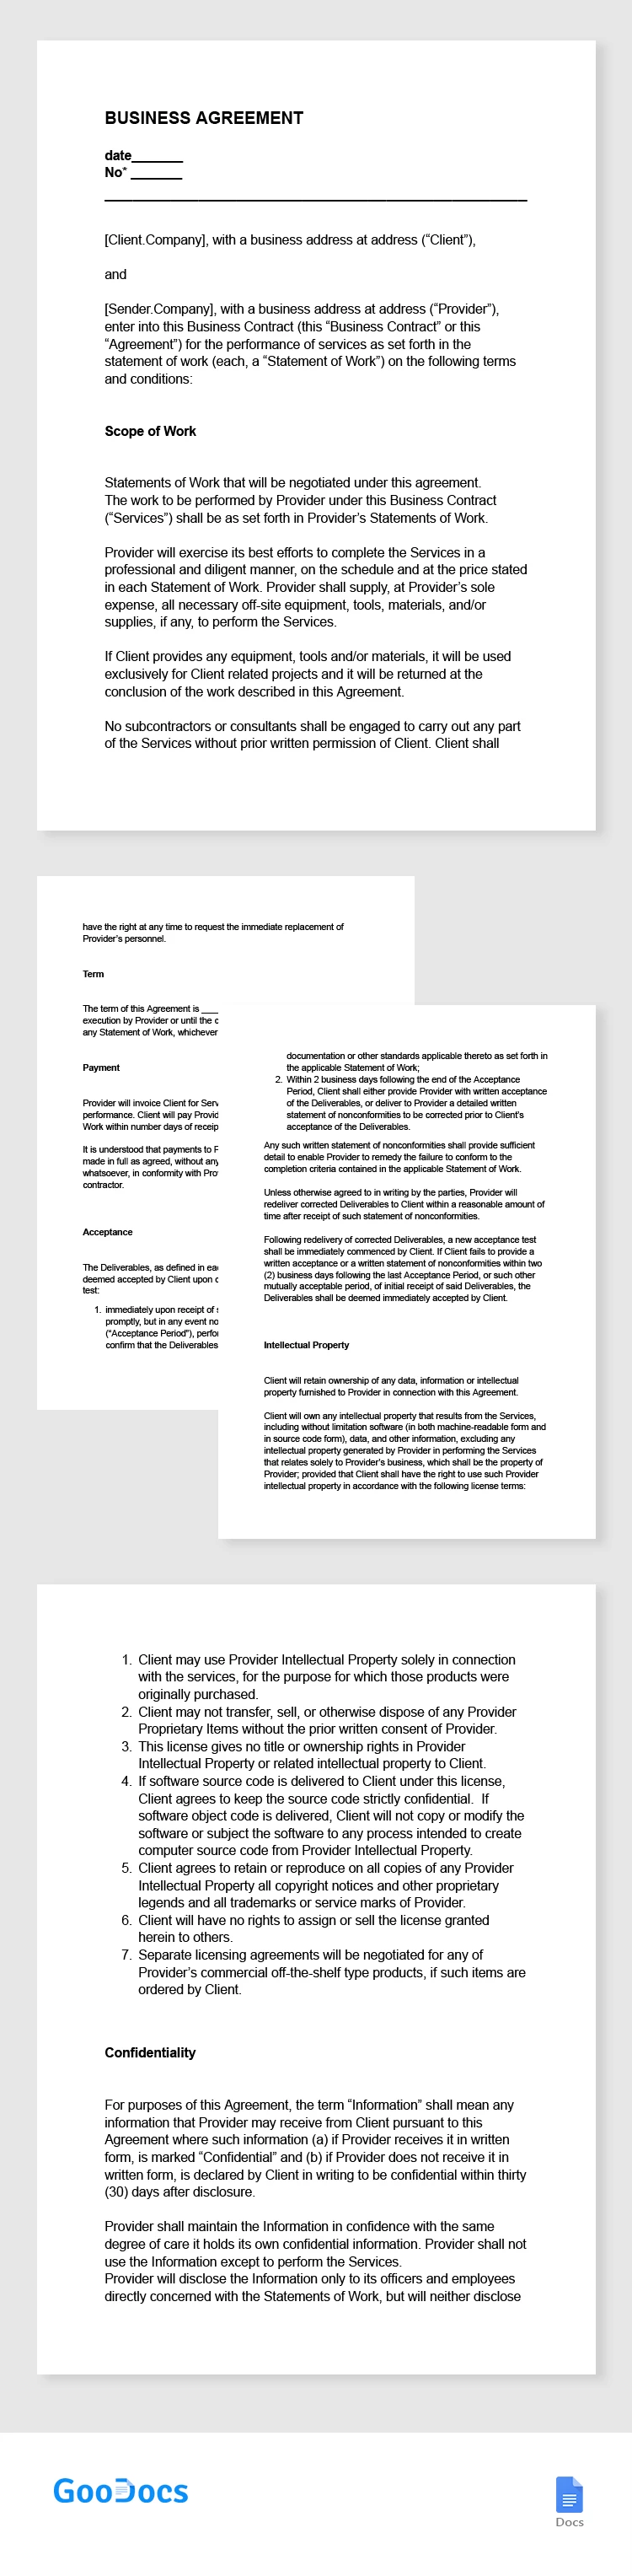 Business Agreement - free Google Docs Template - 10065306